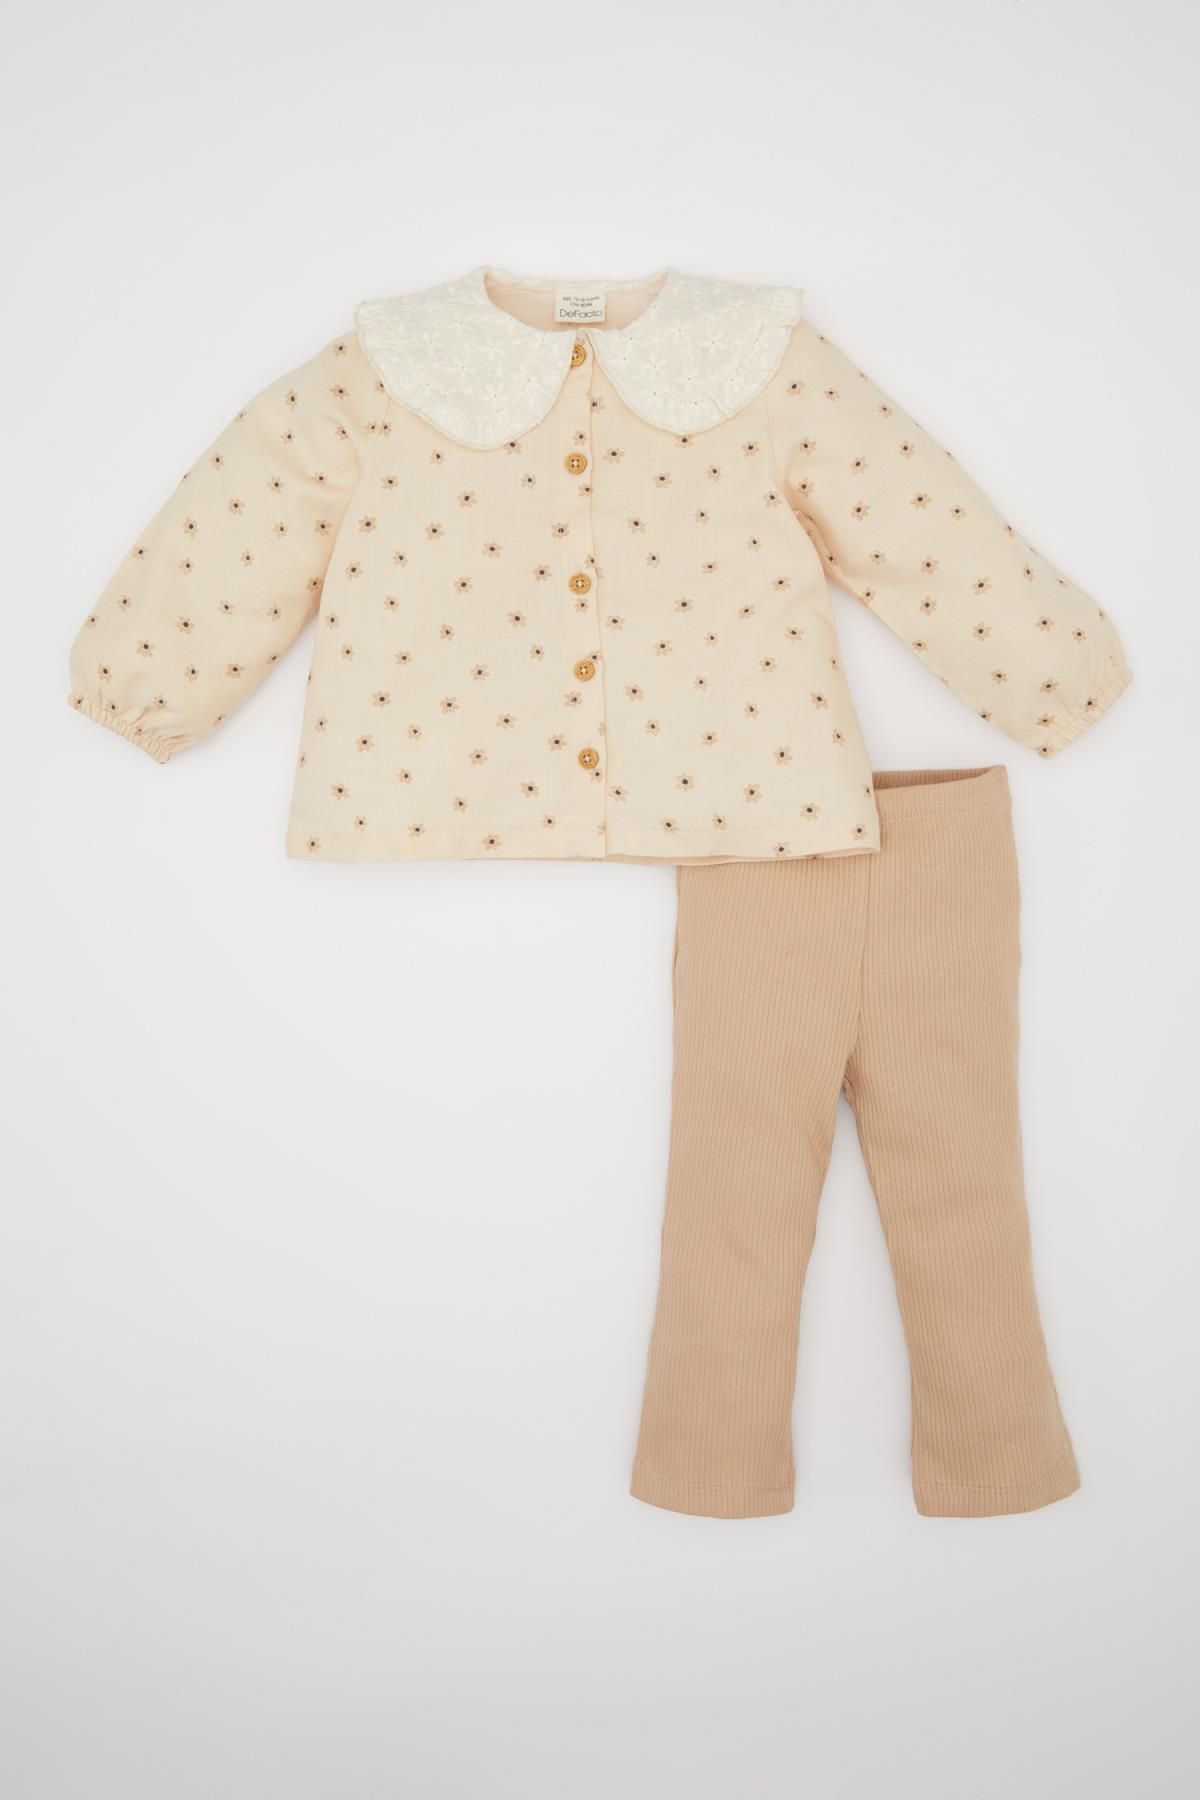 Defacto Kız Bebek Çiçekli Twill Desenli Gömlek Tayt 2li Takım C3116A524SP